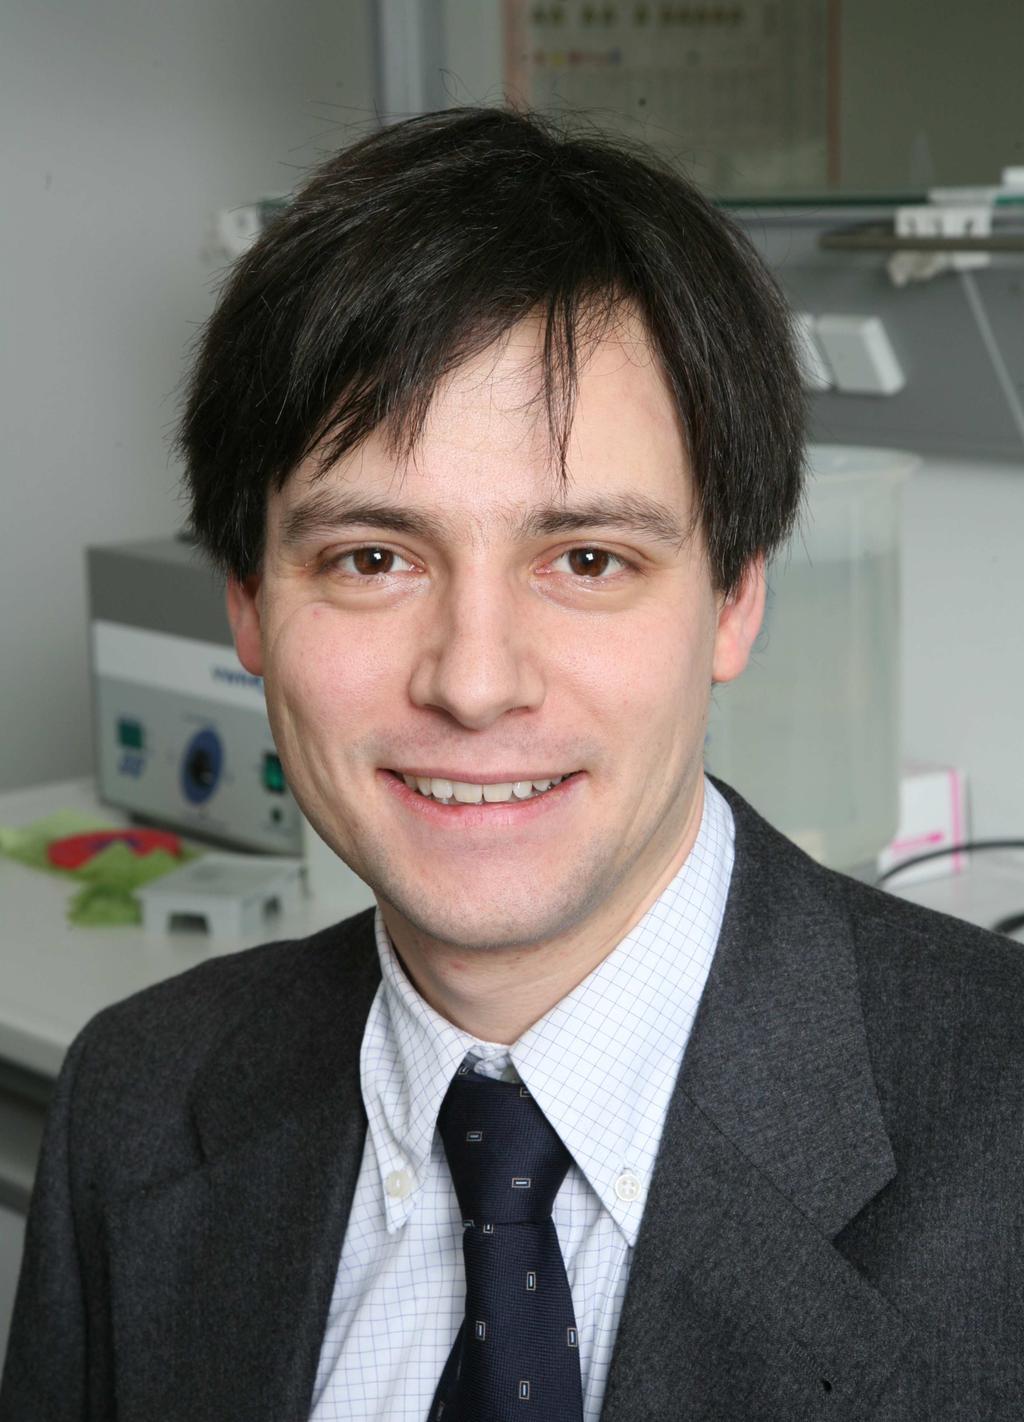 Jörg Hackermüller received his PhD in hemistry from. Vienna in 2004.